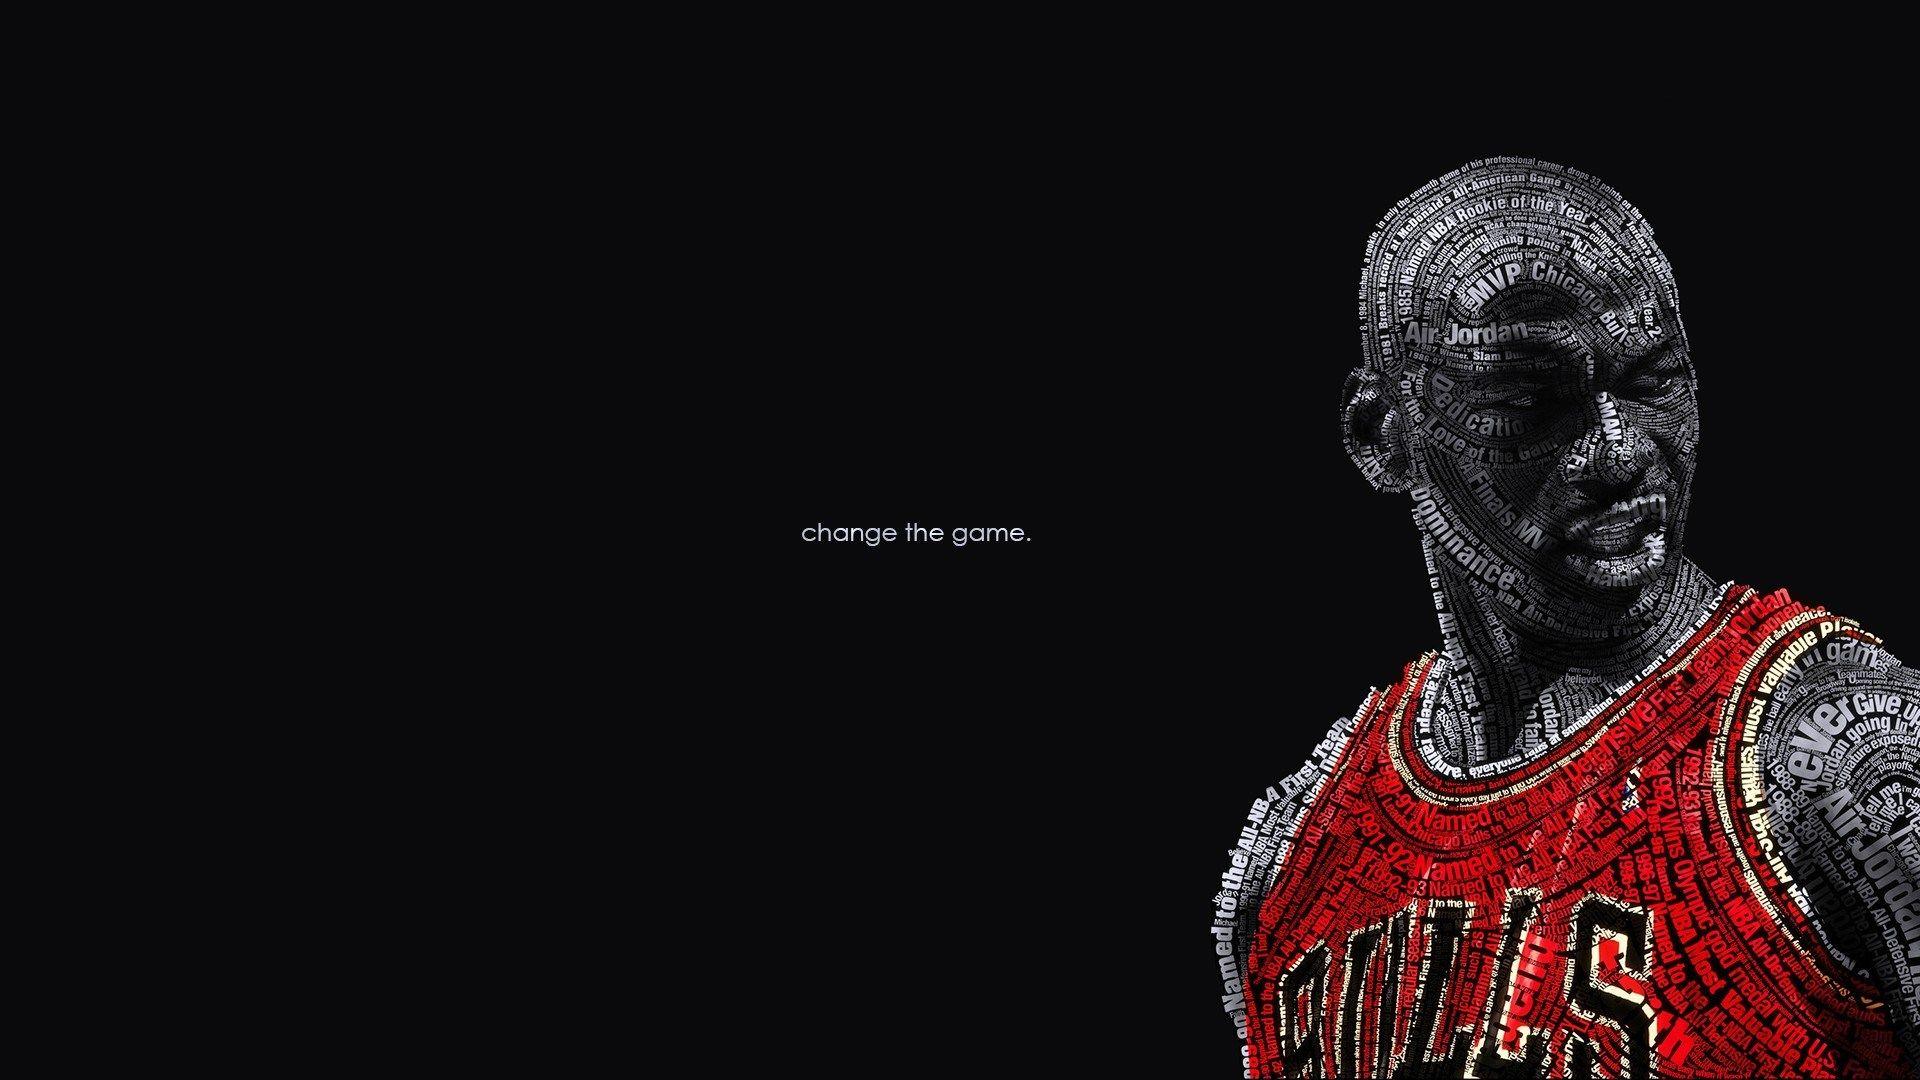 basketball desktop background picture free. Hypebeast wallpaper, Bulls wallpaper, Jordan logo wallpaper